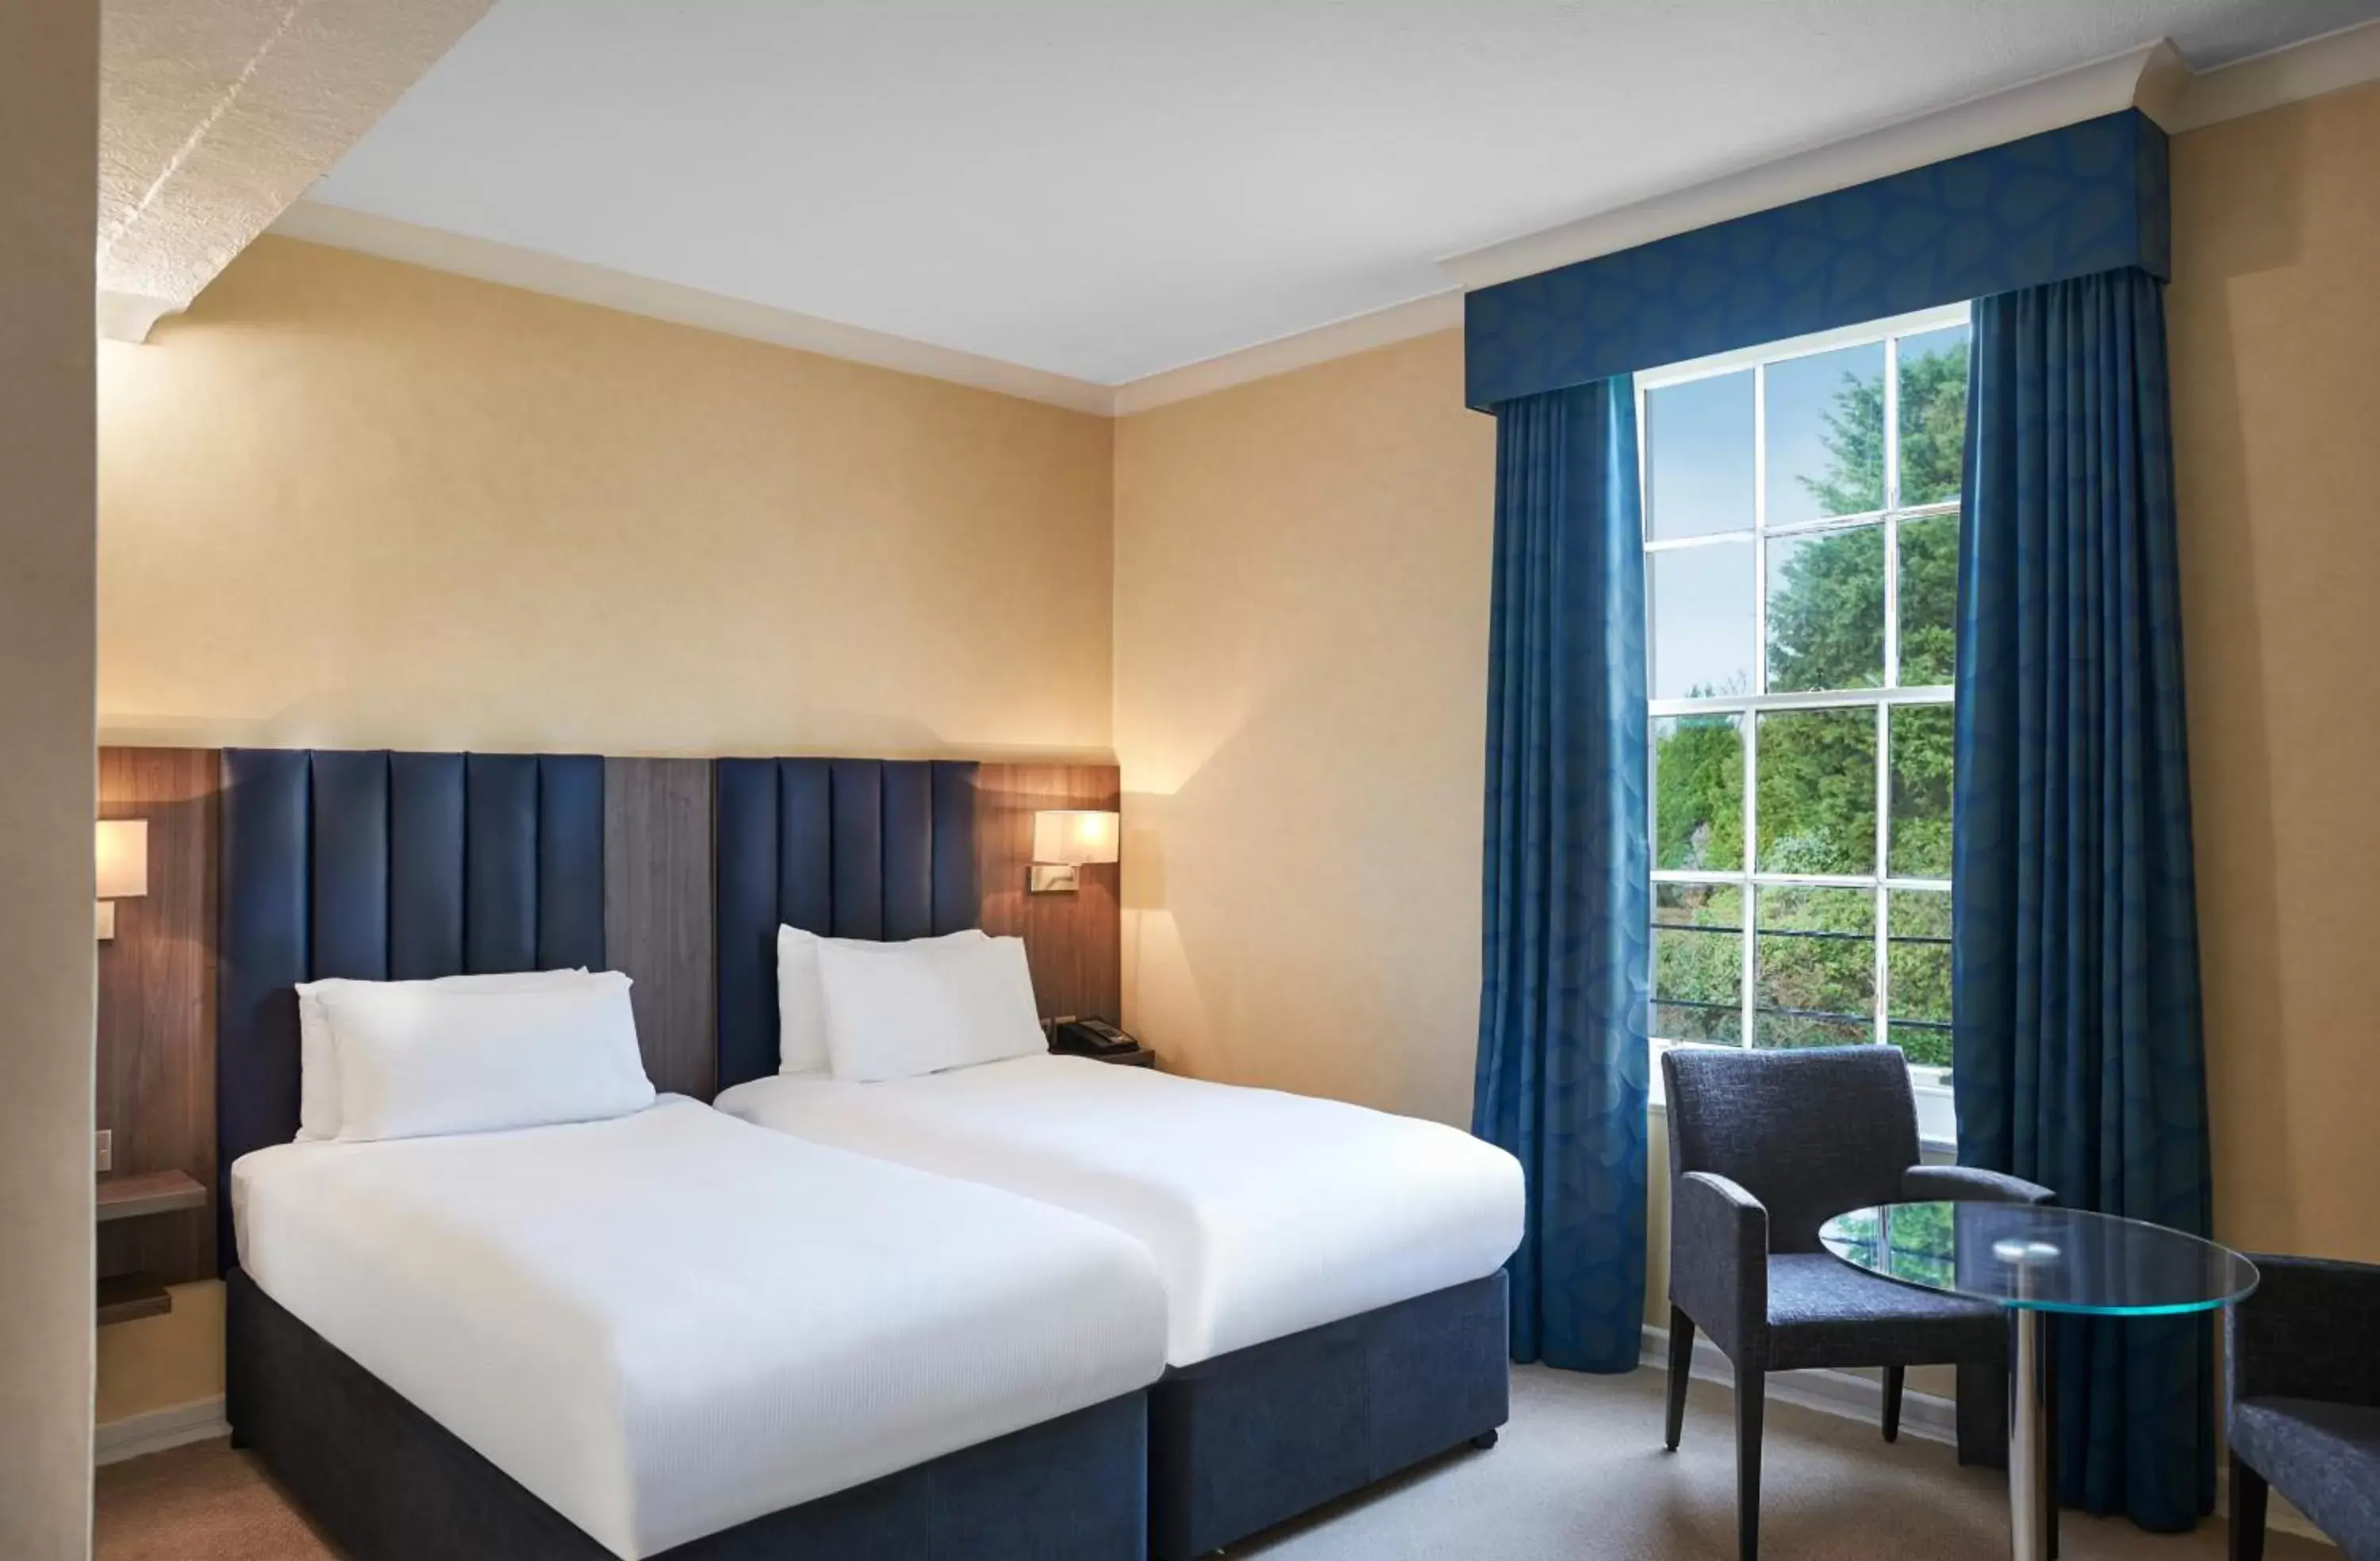 Twin Room in Avisford Park Hotel